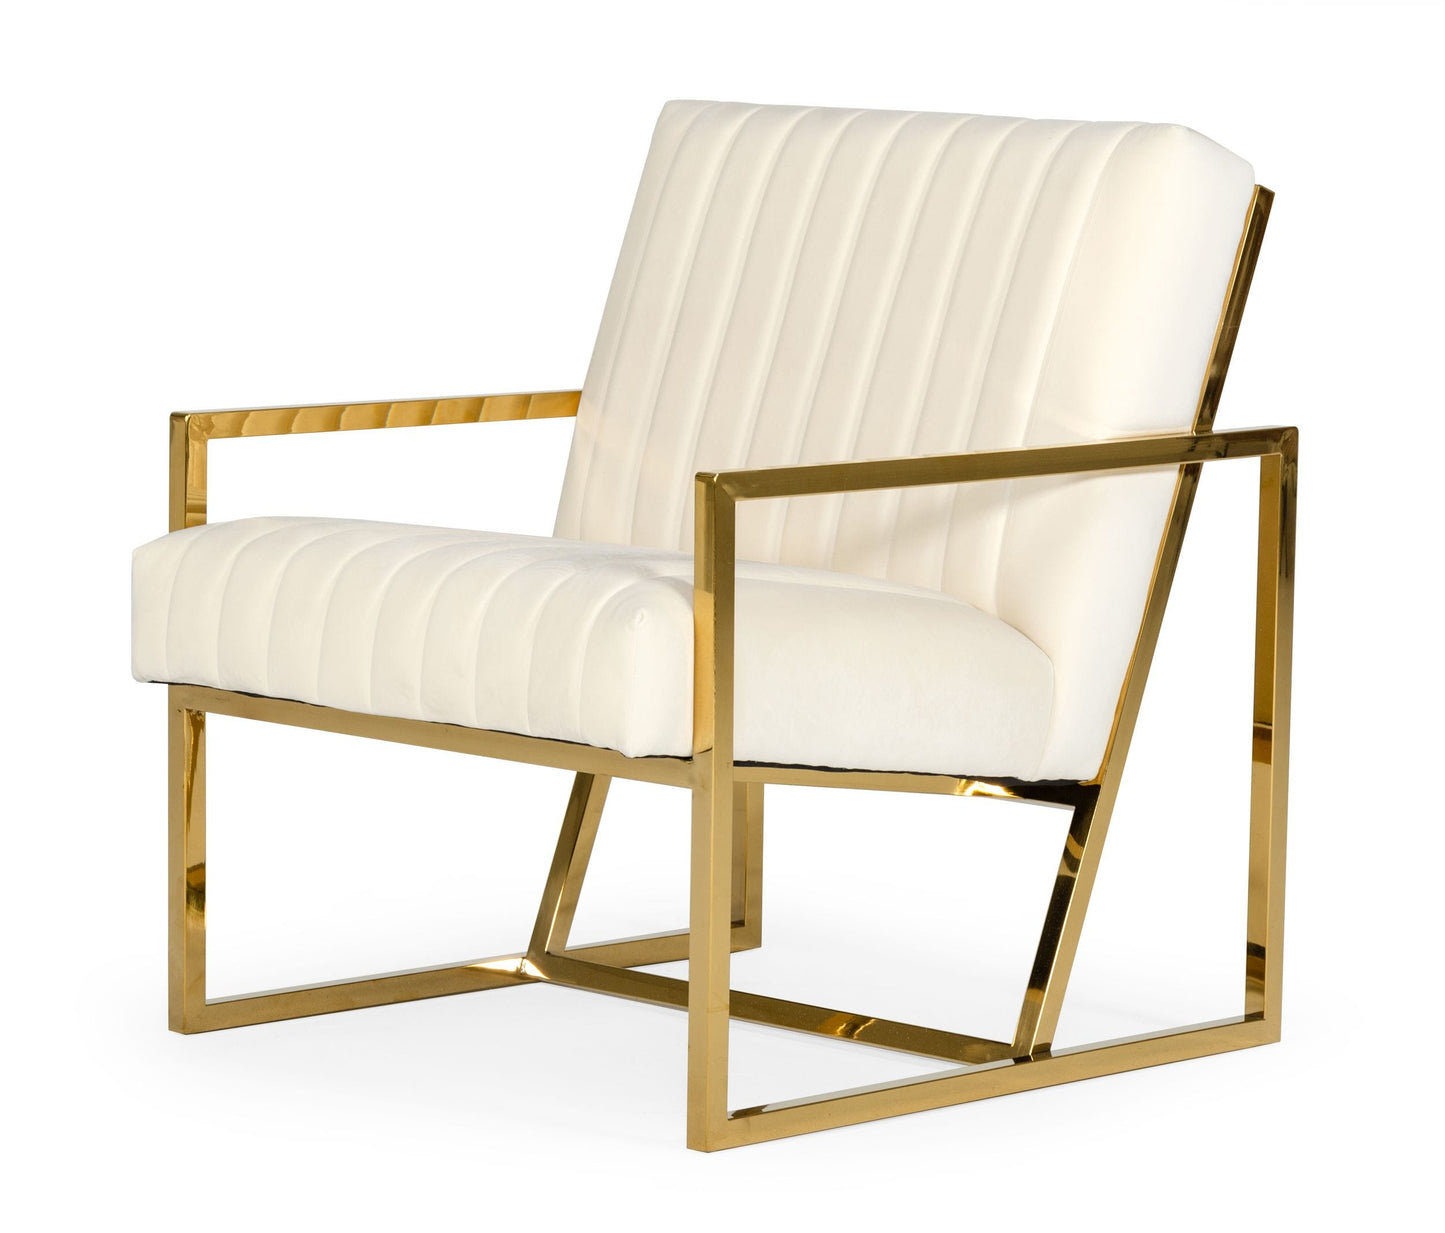 Divani Casa Baylor - Modern Off-White Accent Chair-6